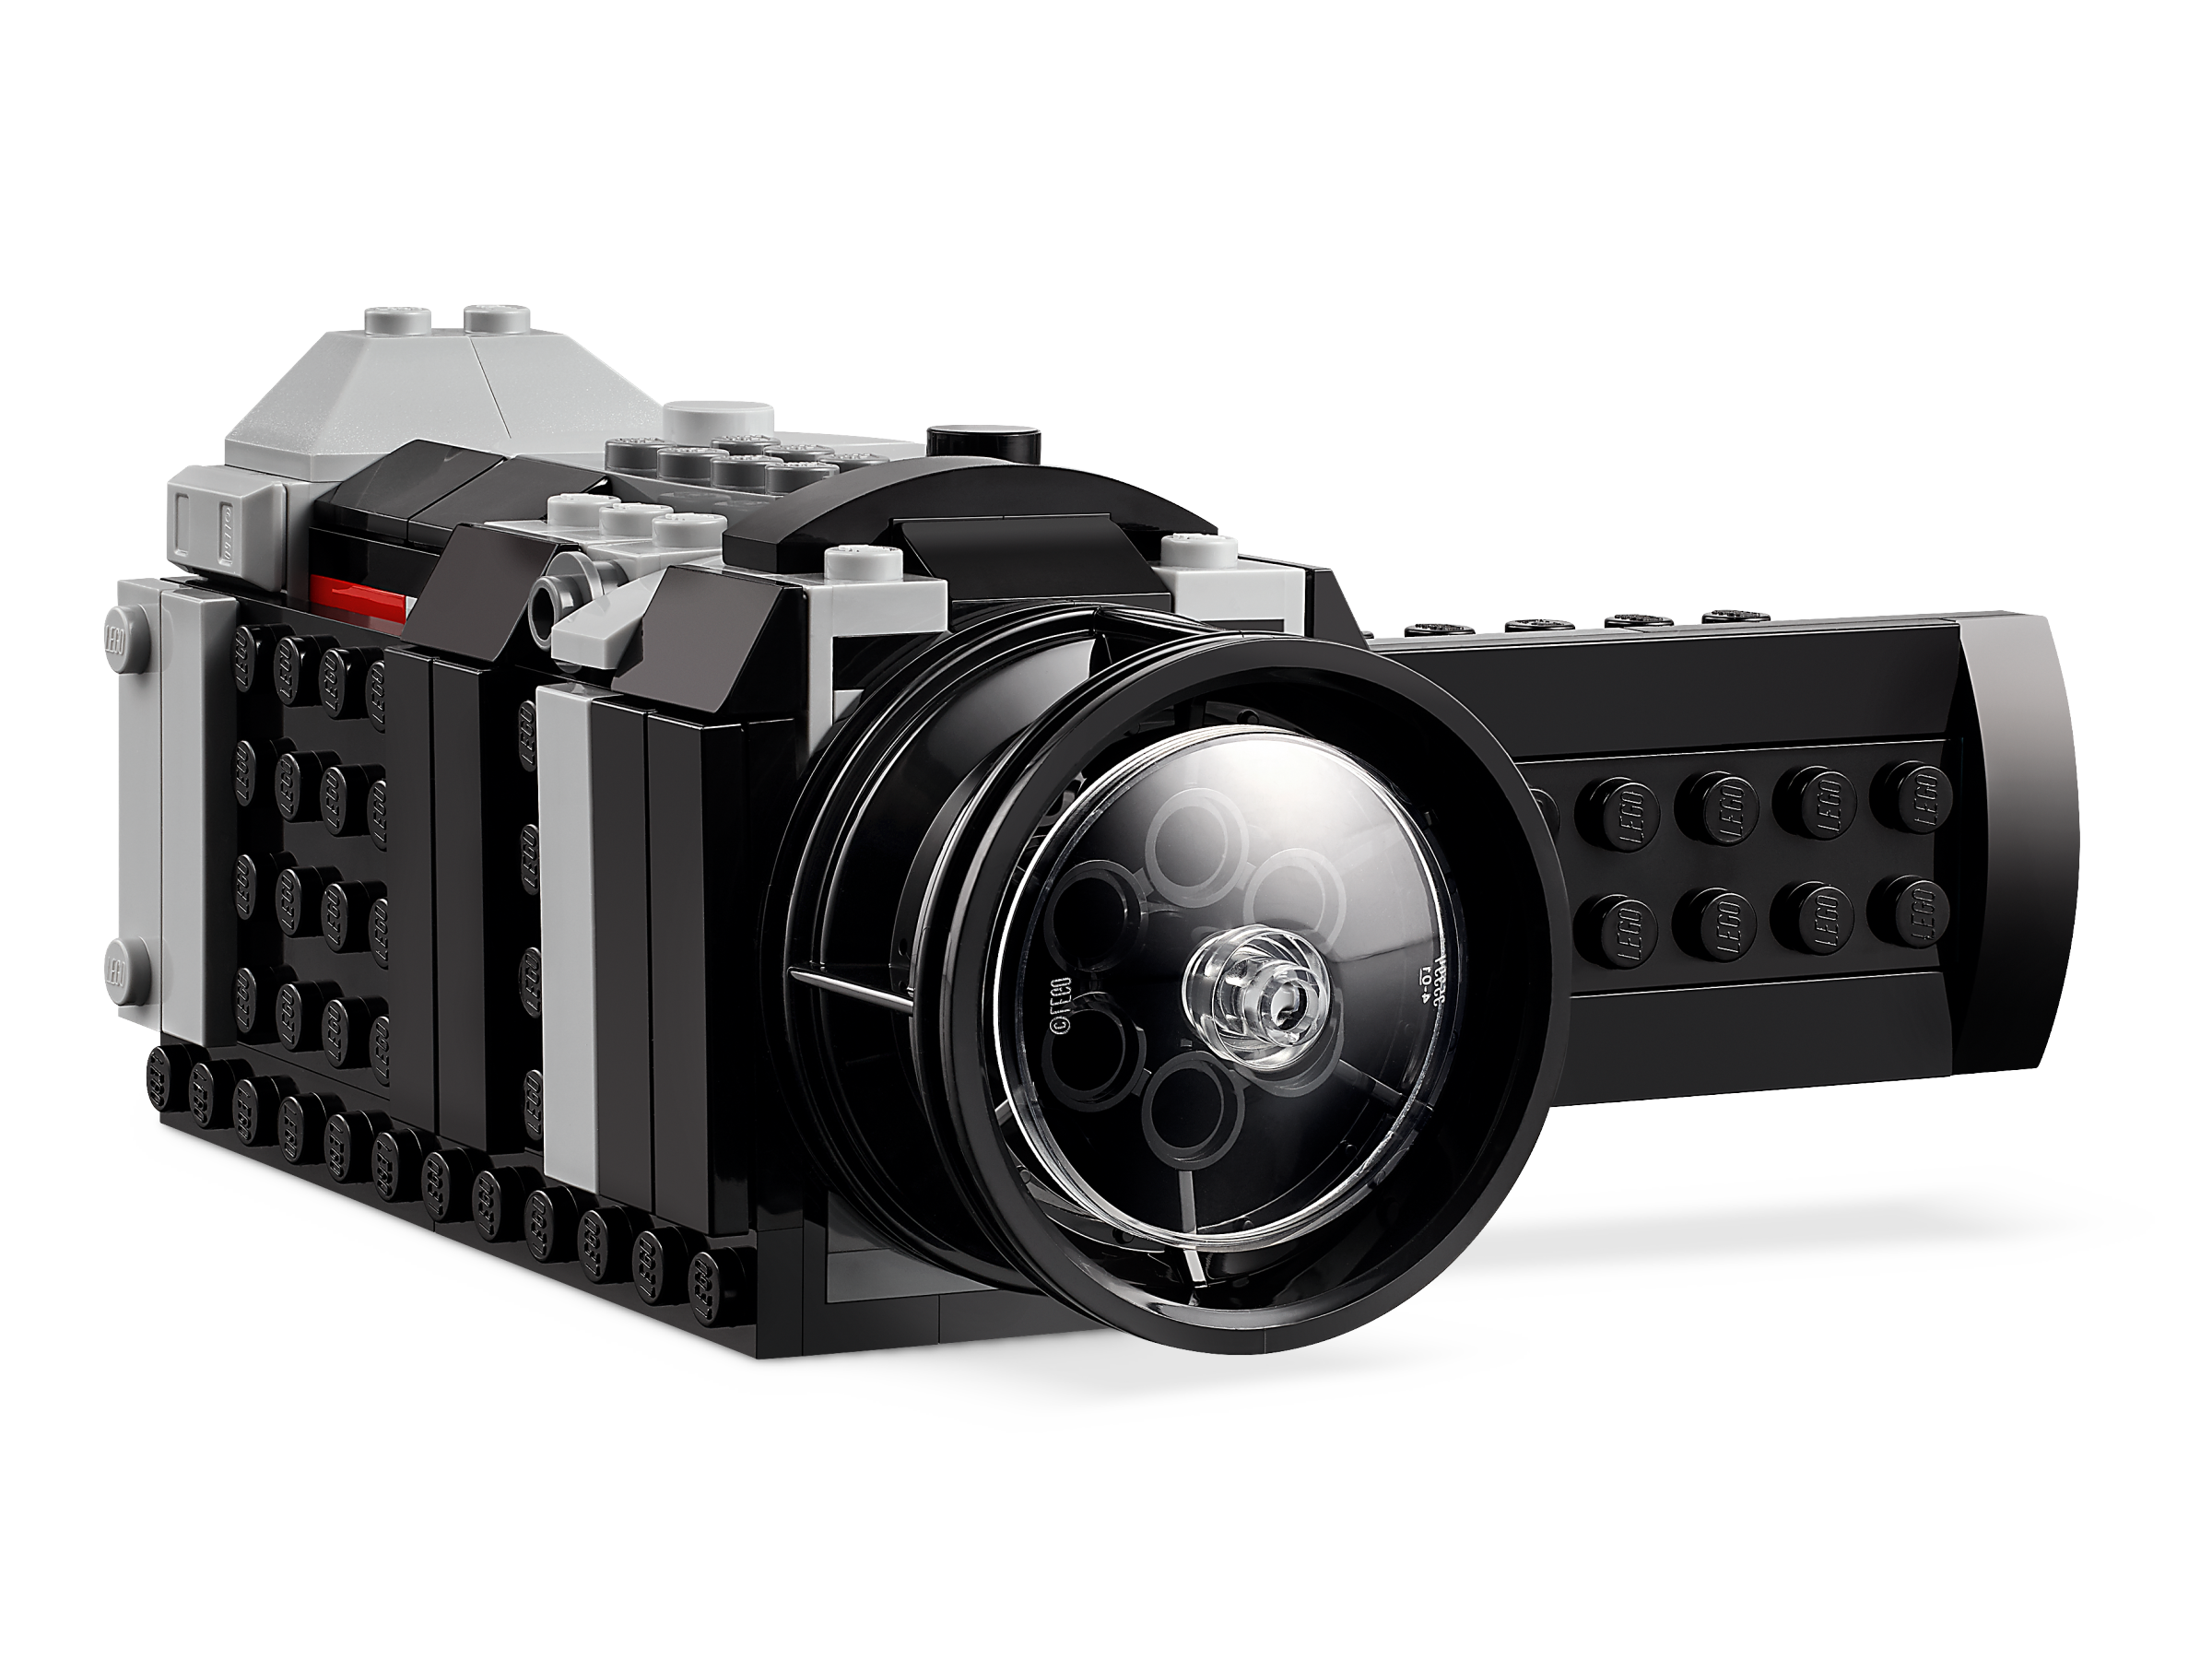 Lego retro 35mm film SLR coming in 2024! - Amateur Photographer